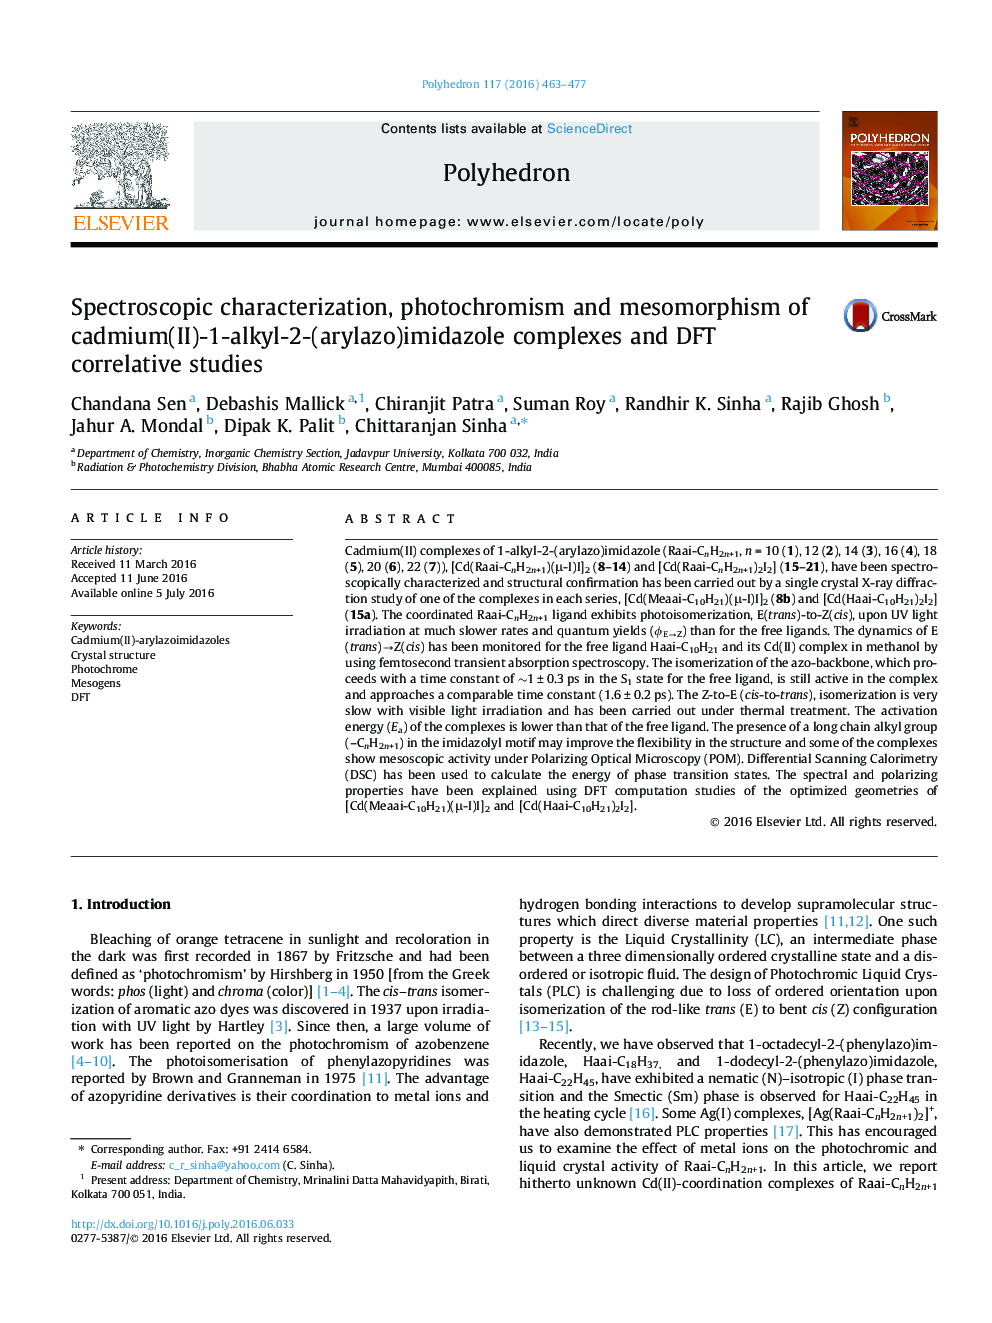 Spectroscopic characterization, photochromism and mesomorphism of cadmium(II)-1-alkyl-2-(arylazo)imidazole complexes and DFT correlative studies